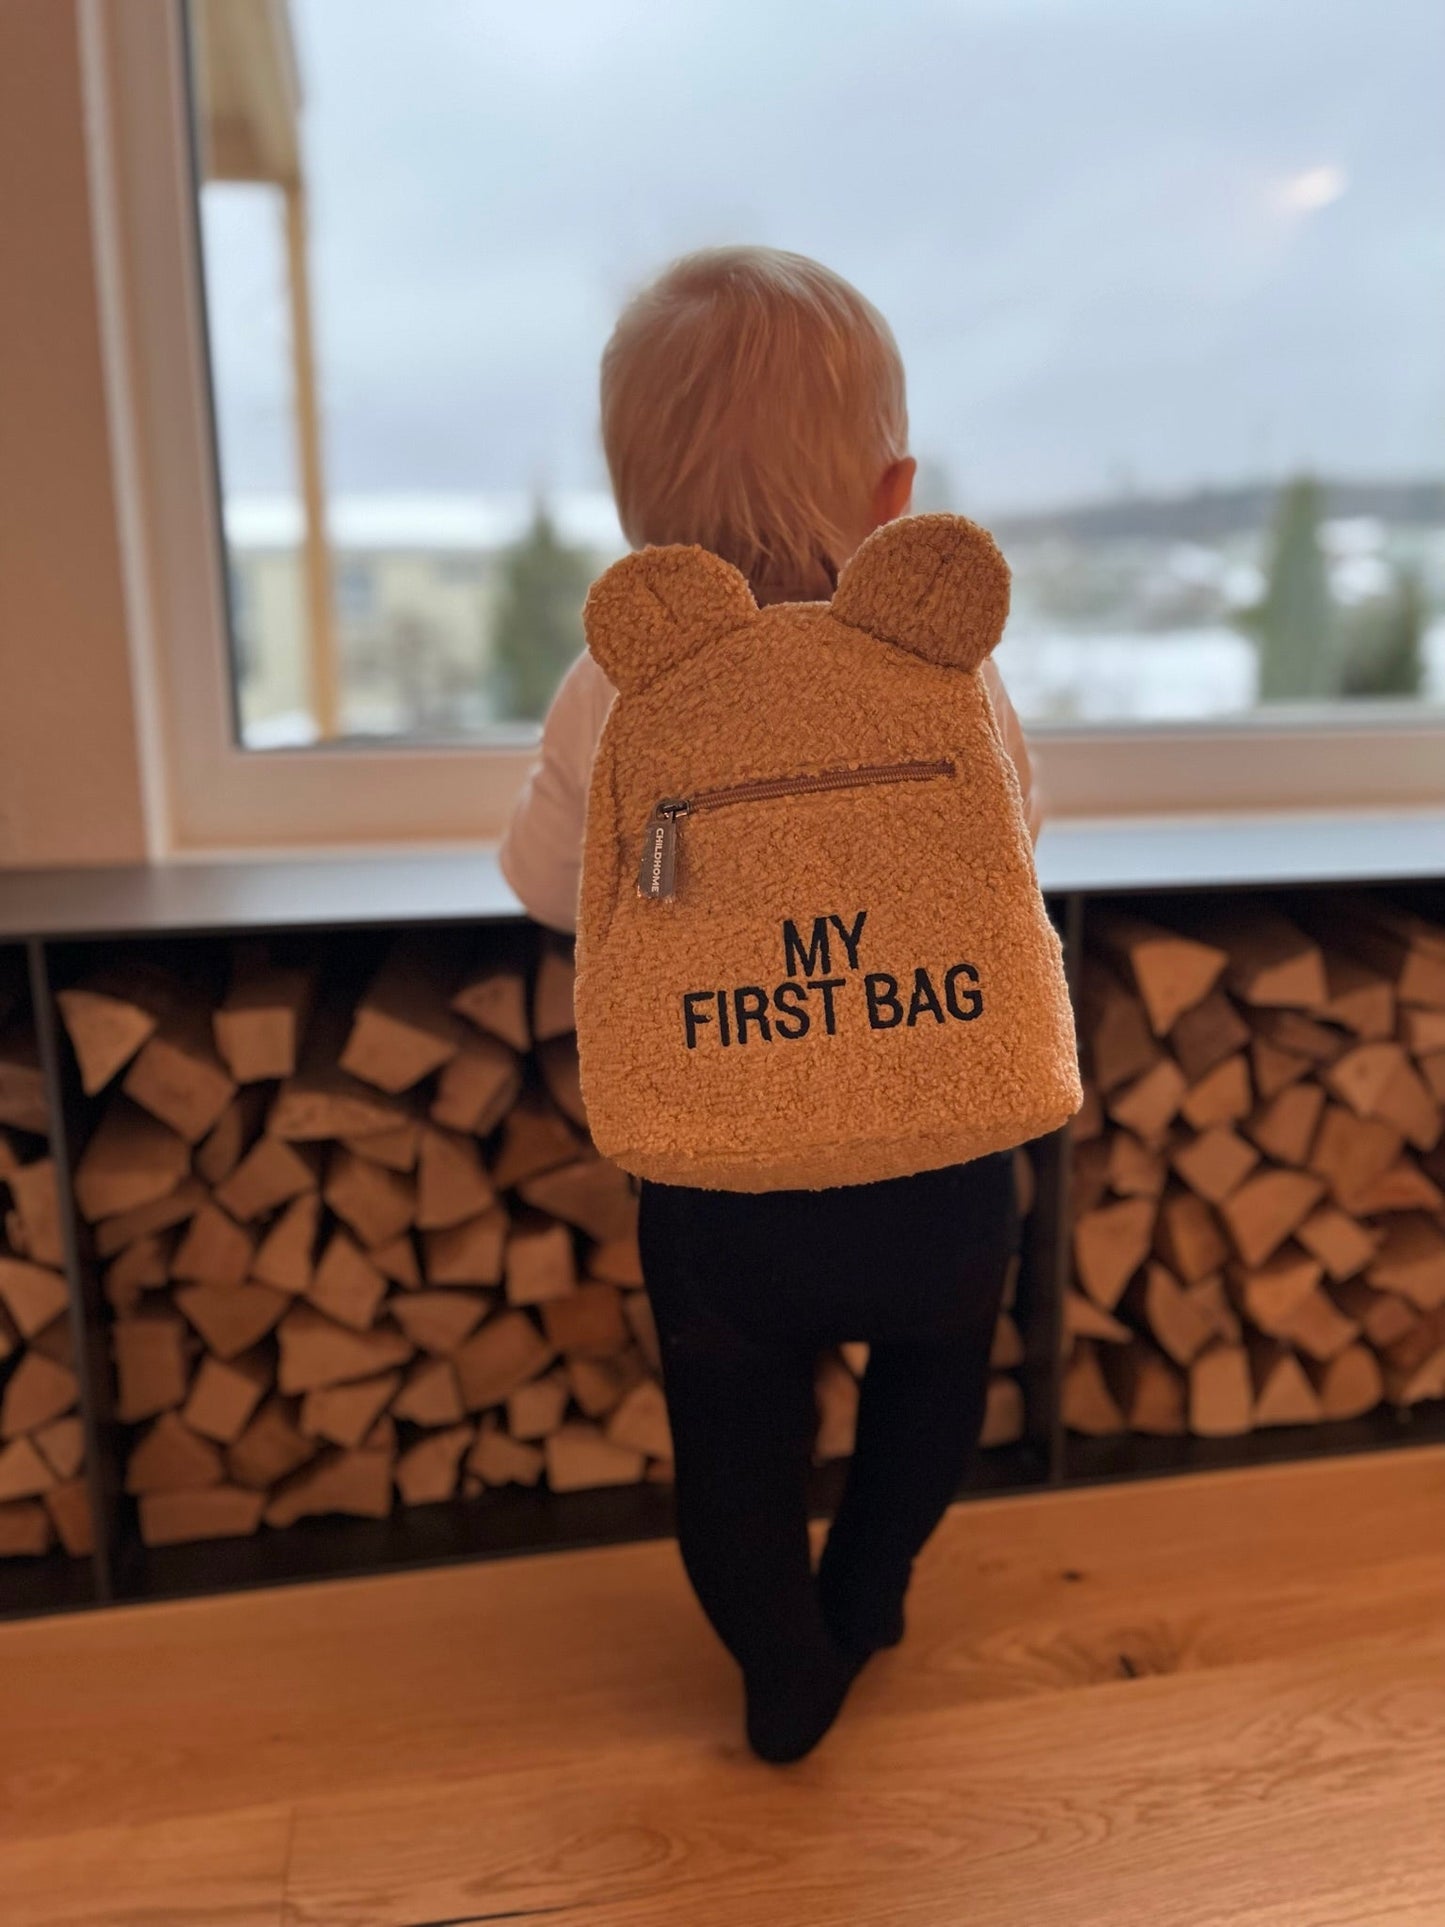 CHILDHOME "My First Bag" - Teddy braun - Siliblu Boutique & Atelier